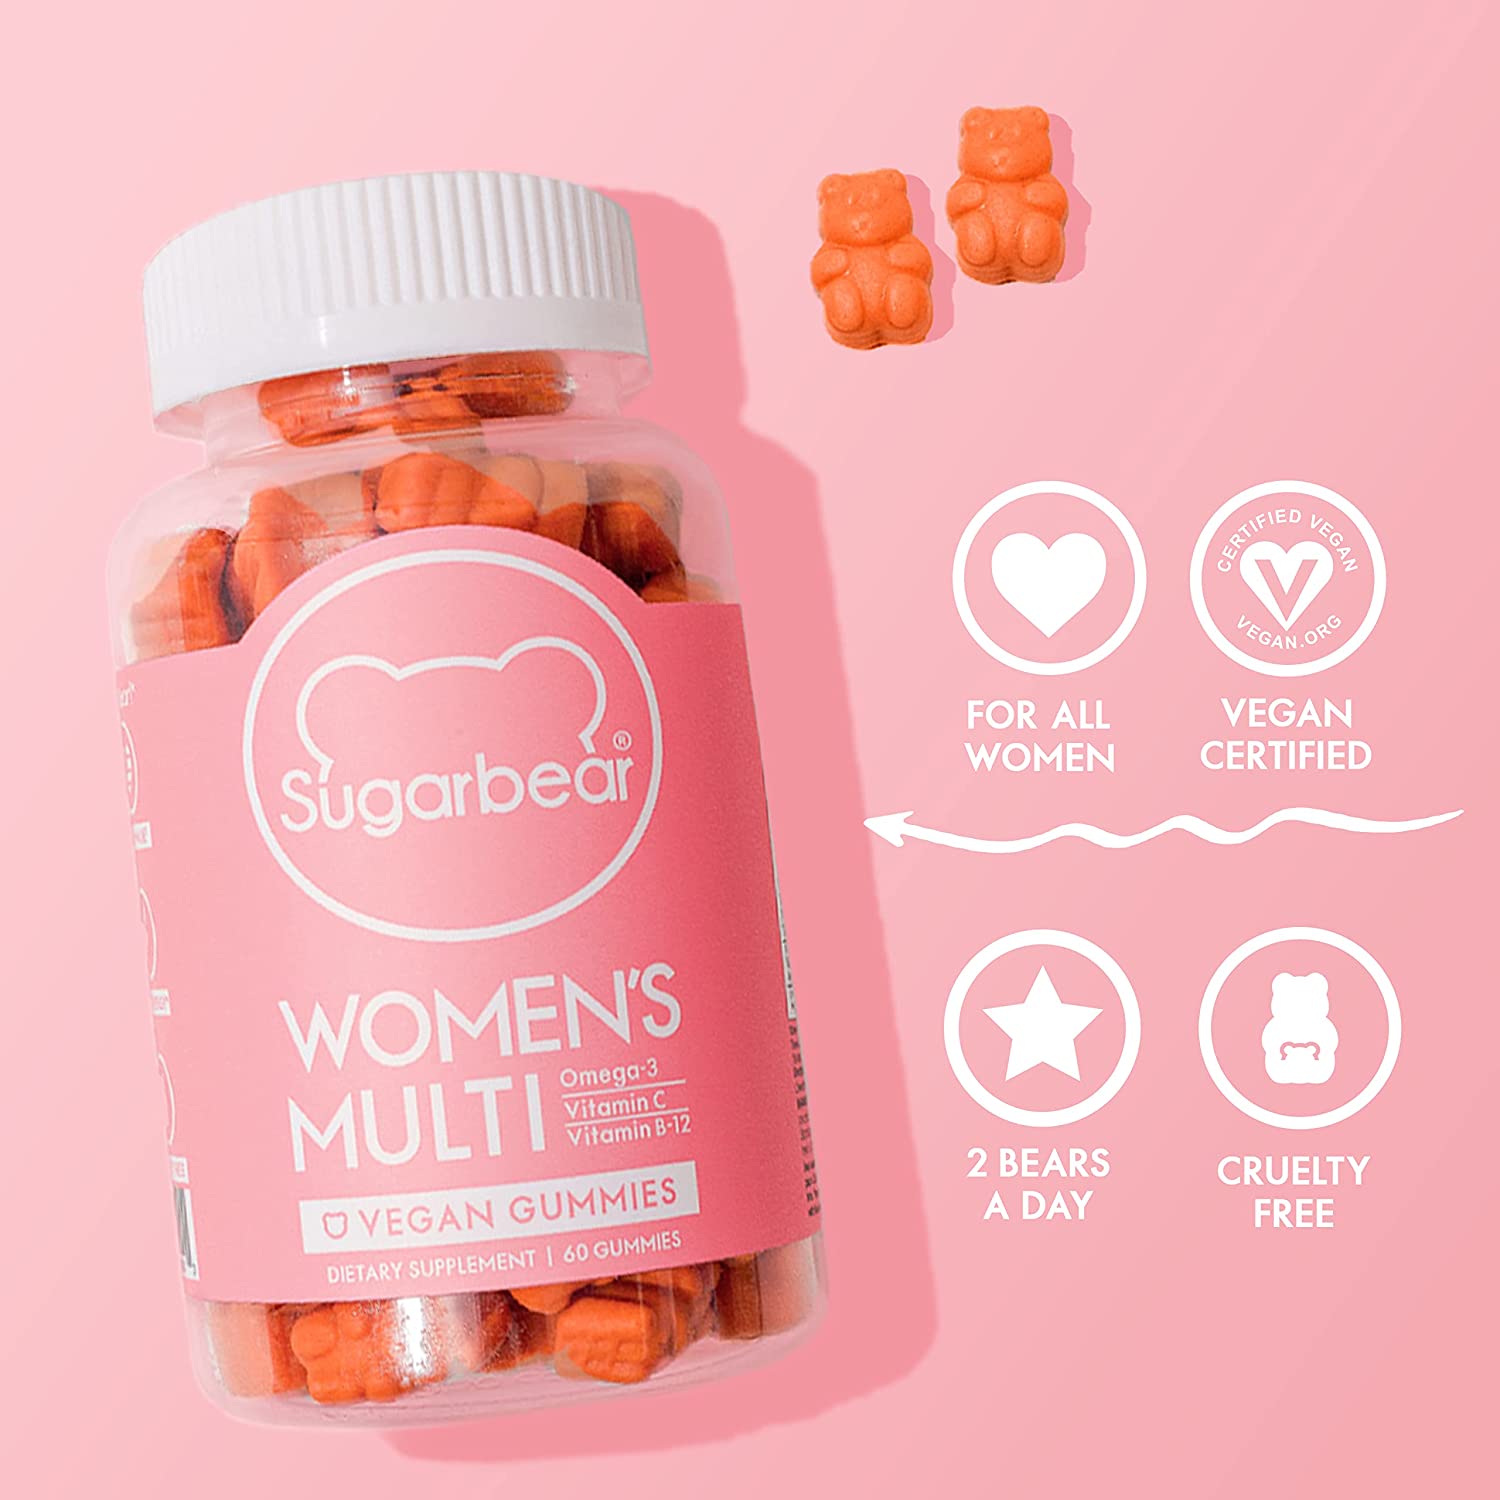 SUGARBEAR Women's Multi Vegan Gummy 1 Month فيتامينات مقويه للنساء شوكربير ومن